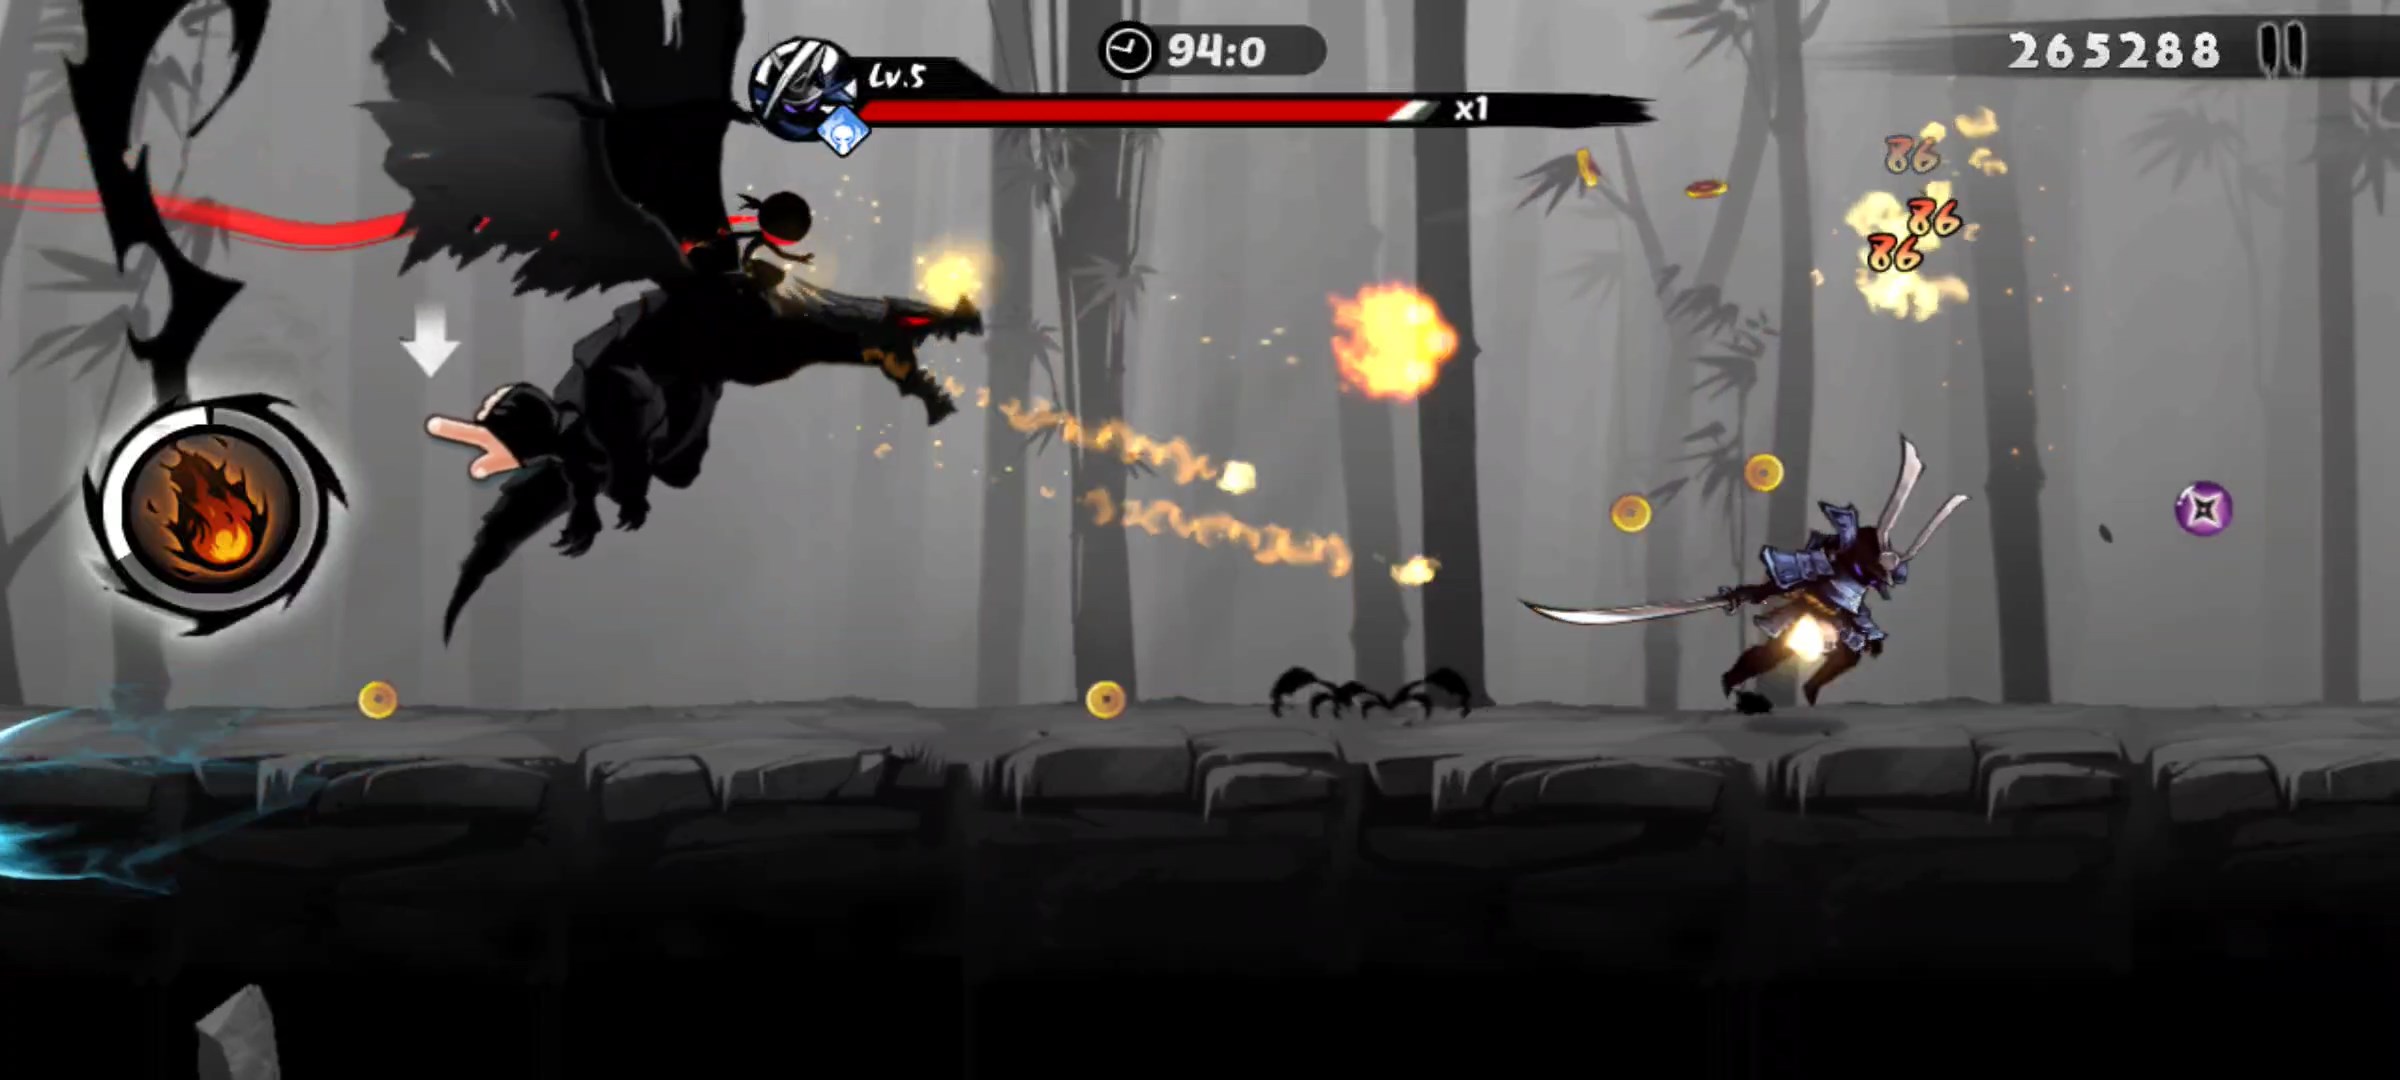 Ninja Must Die - Early Access preview